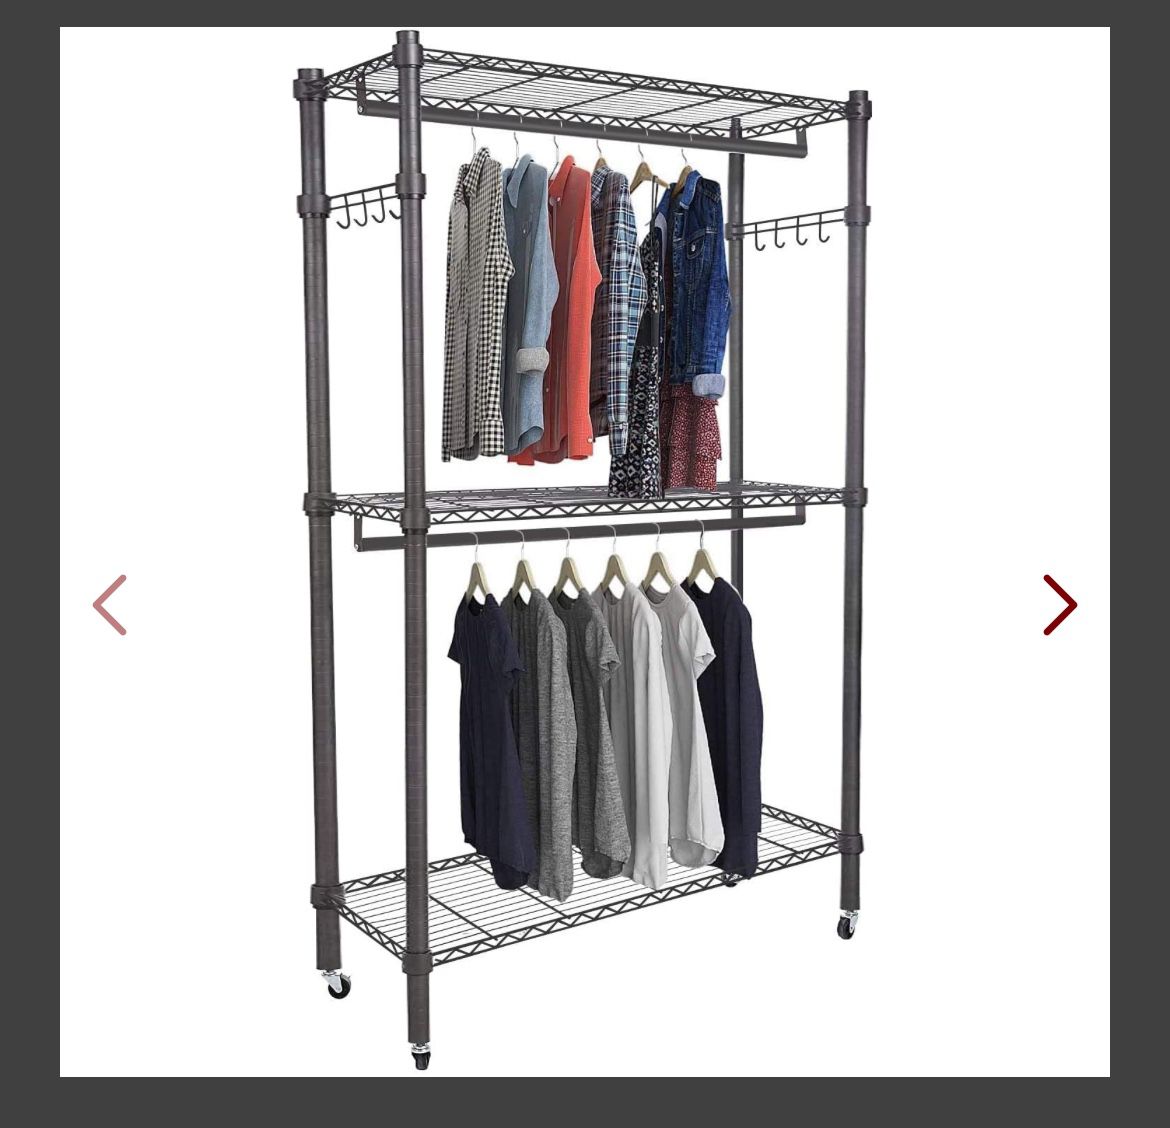 Metal Shelves/ Storage Shelves/ Home Decor/ Laundry Room Equipment 